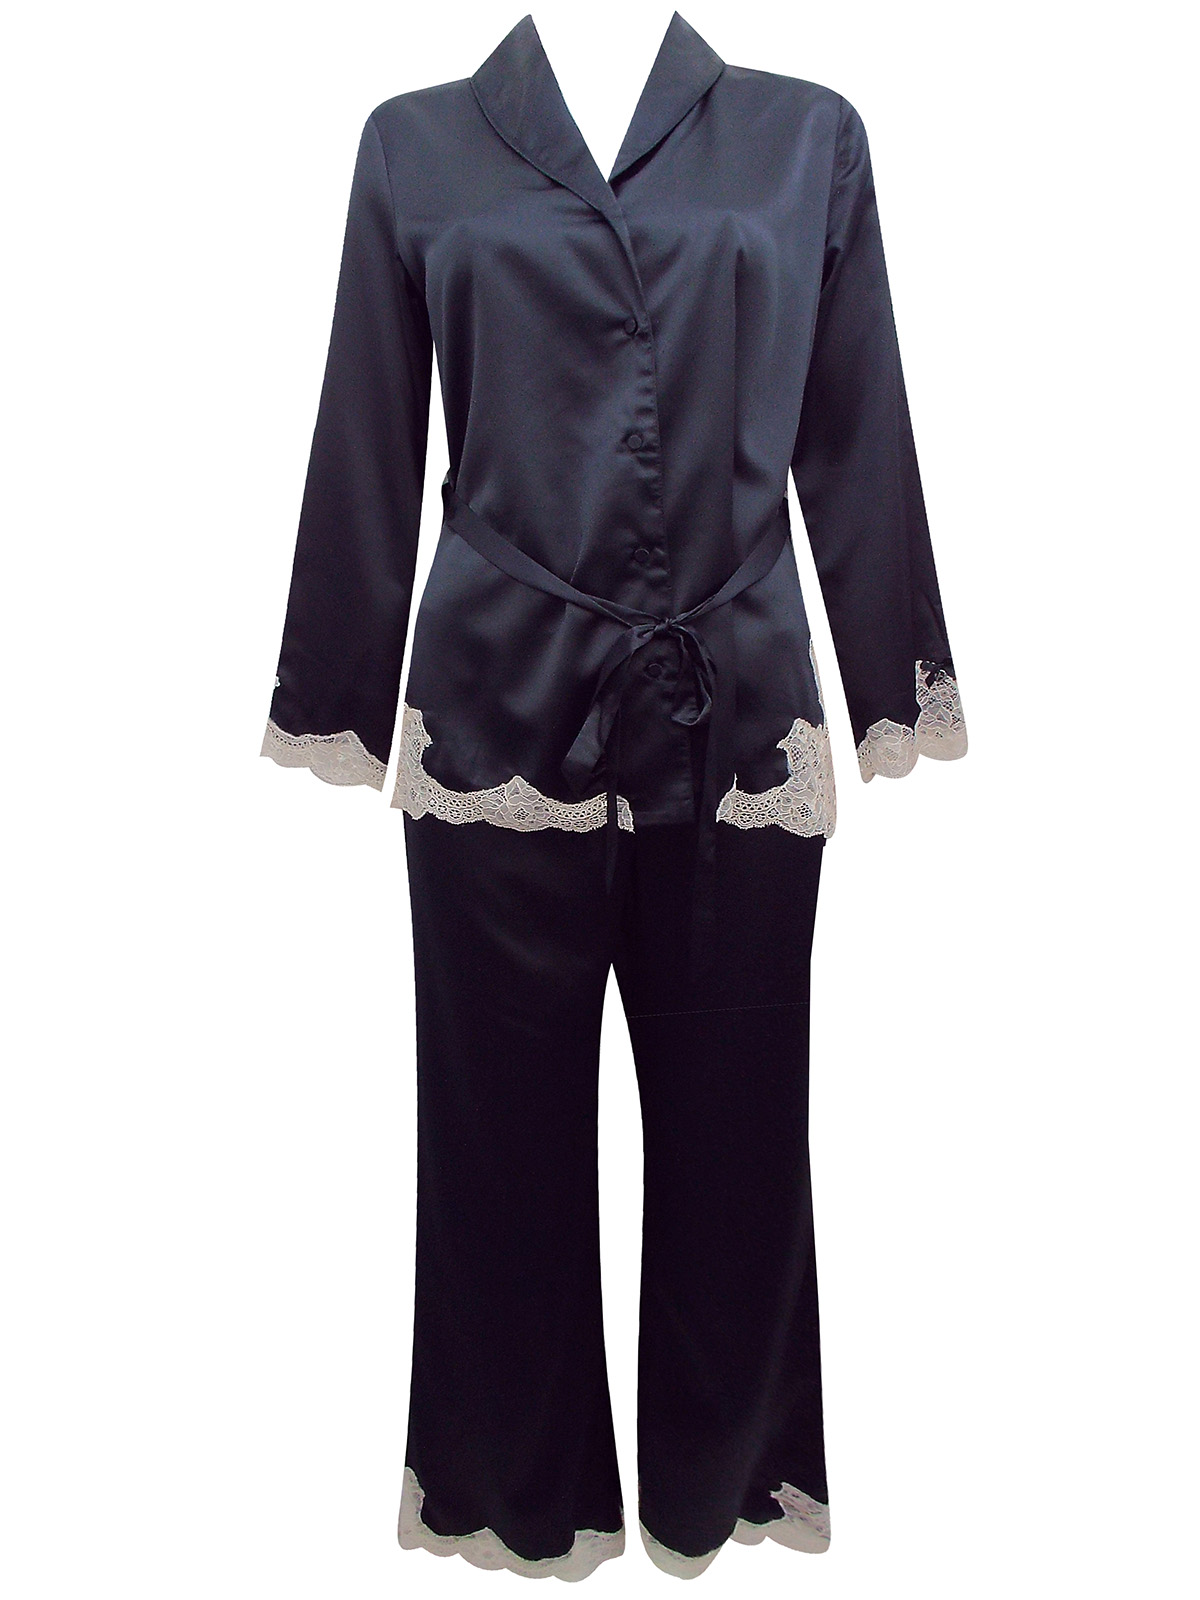 Boux Avenue - - Boux Avenue BLACK Peta Satin & Lace Pyjama Set - Size ...